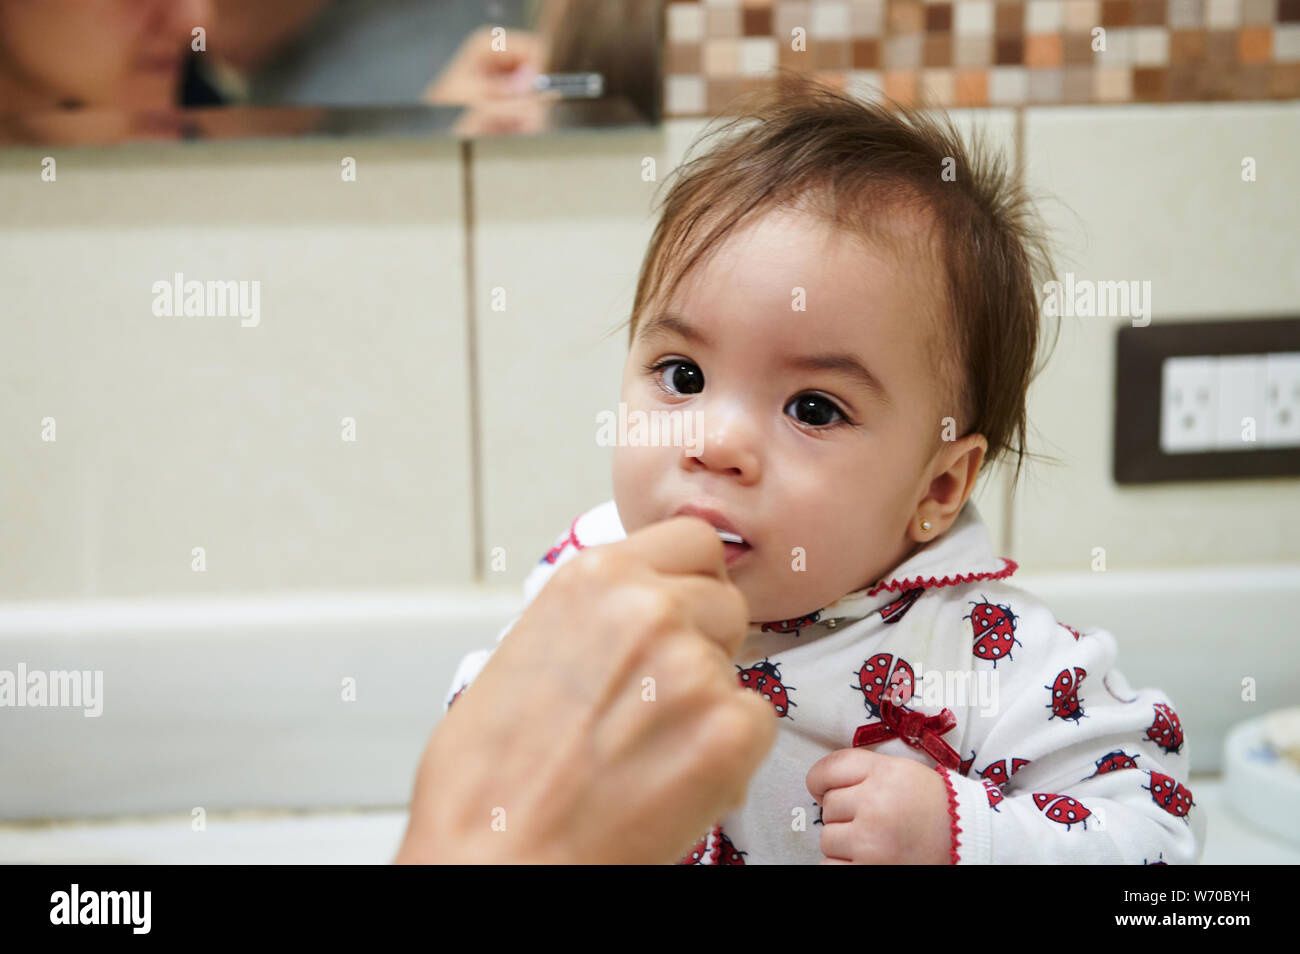 First brushing teeth experience. Portrait of baby girl brushing teeth Stock Photo